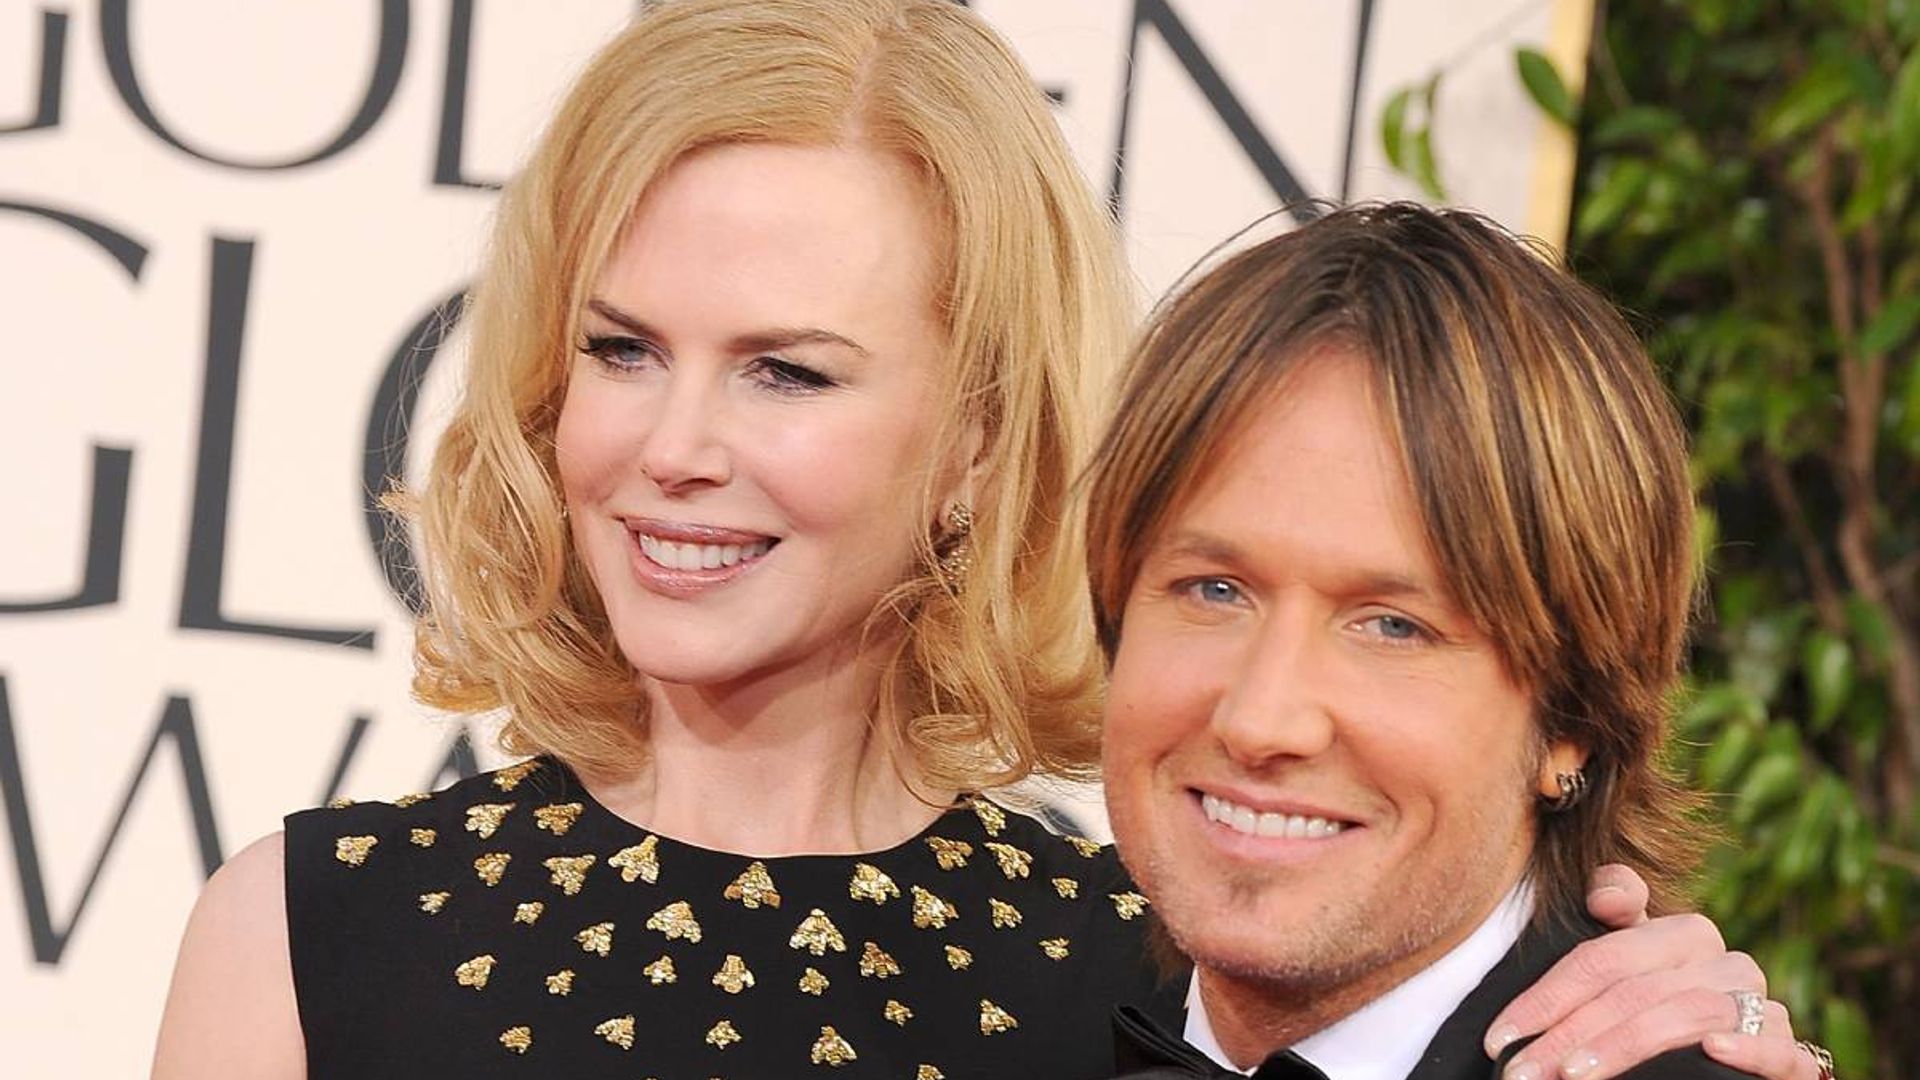 Nicole Kidman's photo of husband Keith Urban sparks major fan reaction